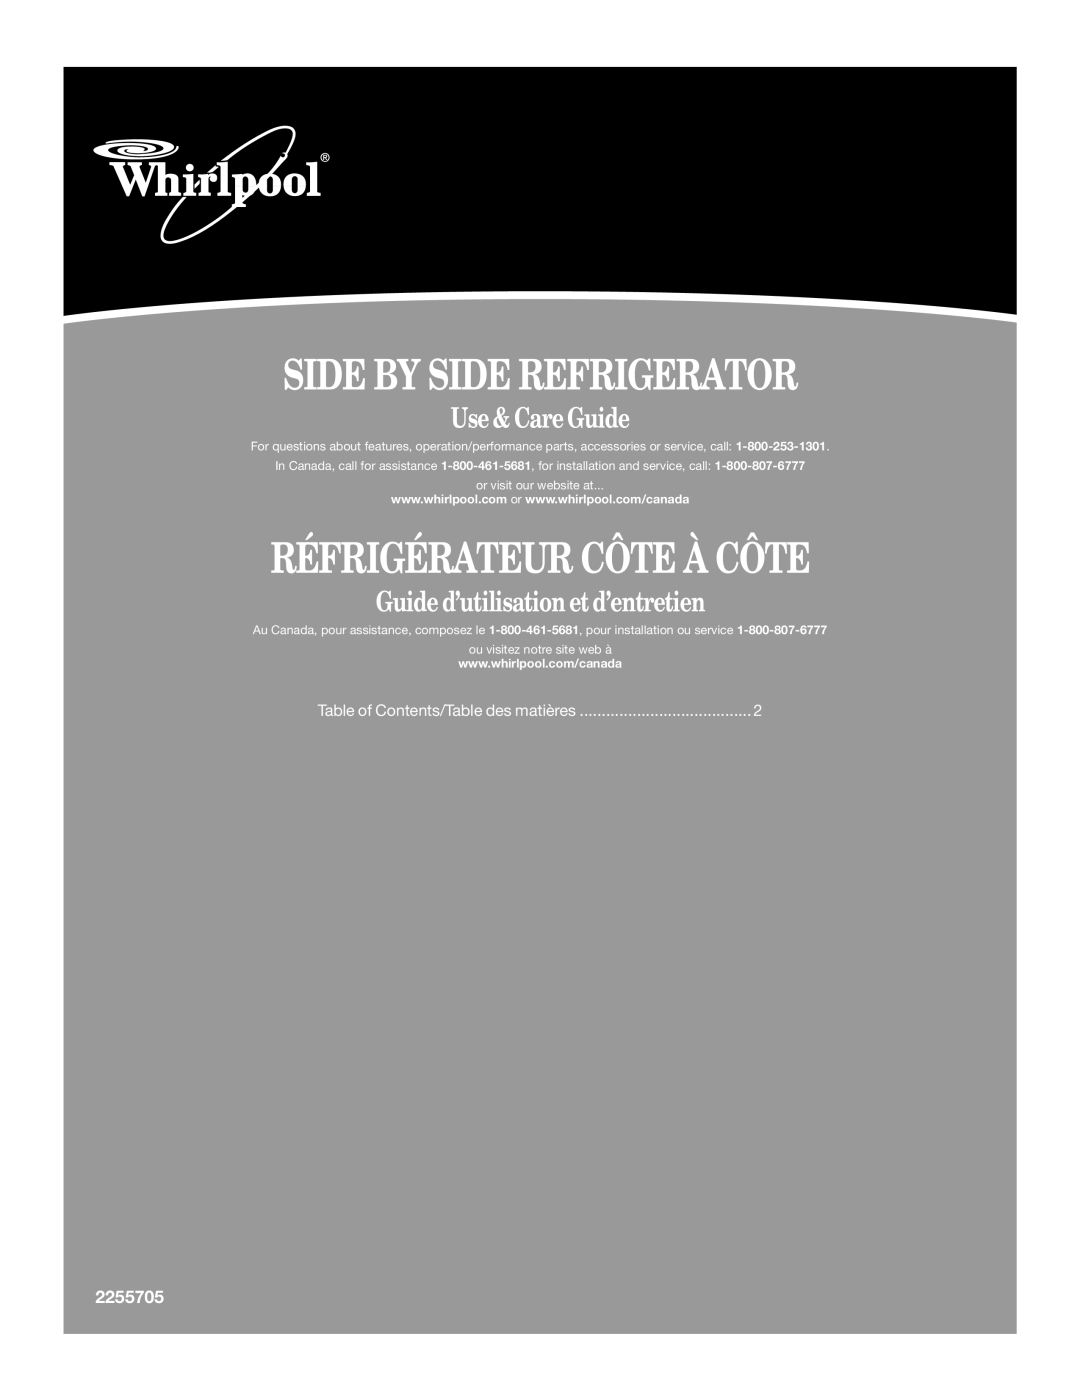 Whirlpool KTLA22EMSS03, ED5NTGXMQ00 manual Side By Side Refrigerator, Réfrigérateur Côte À Côte, Use & Care Guide, 2255705 